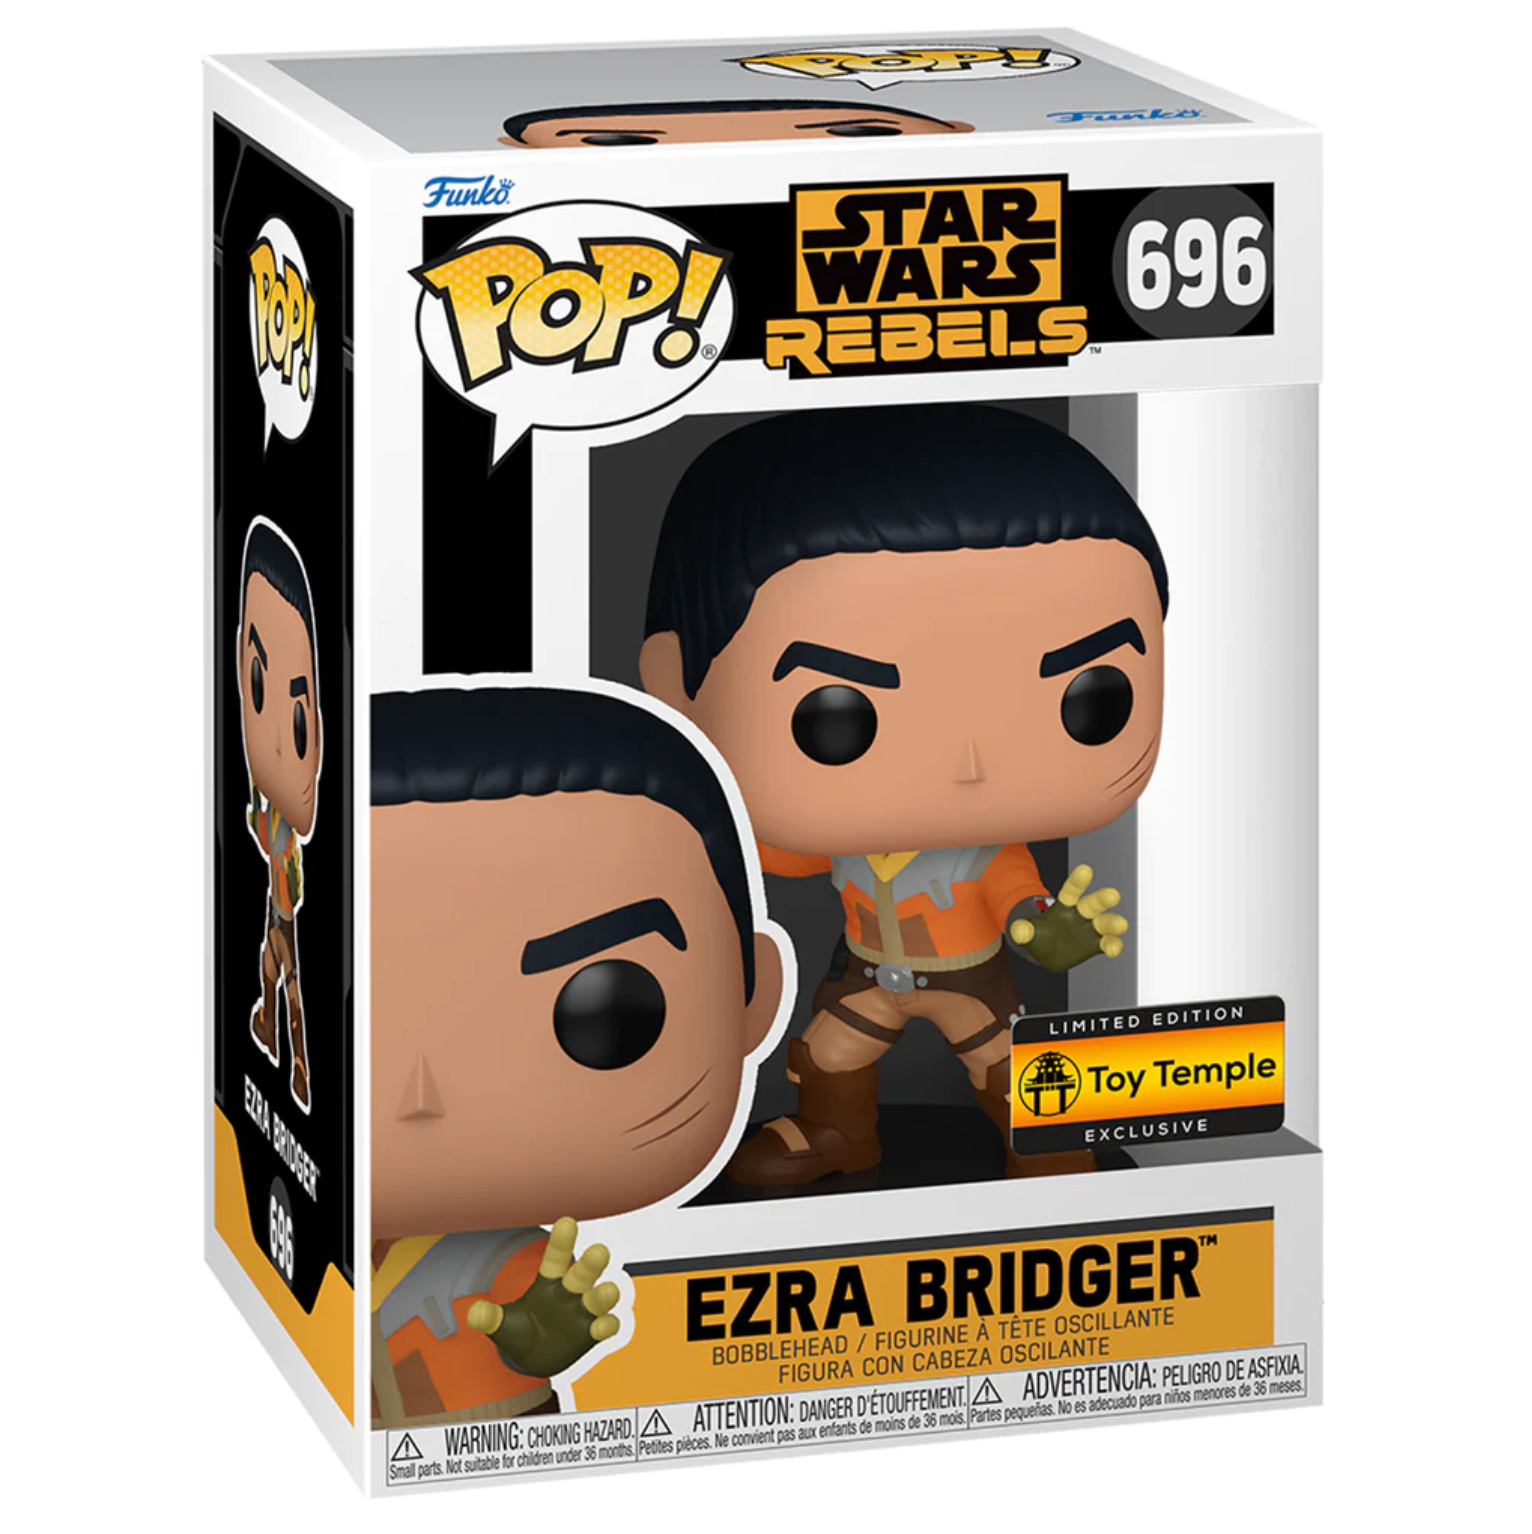 PreOrder NEW Ezra Bridger Star Wars Rebels Funko Toy Temple Excl 696 w/protector